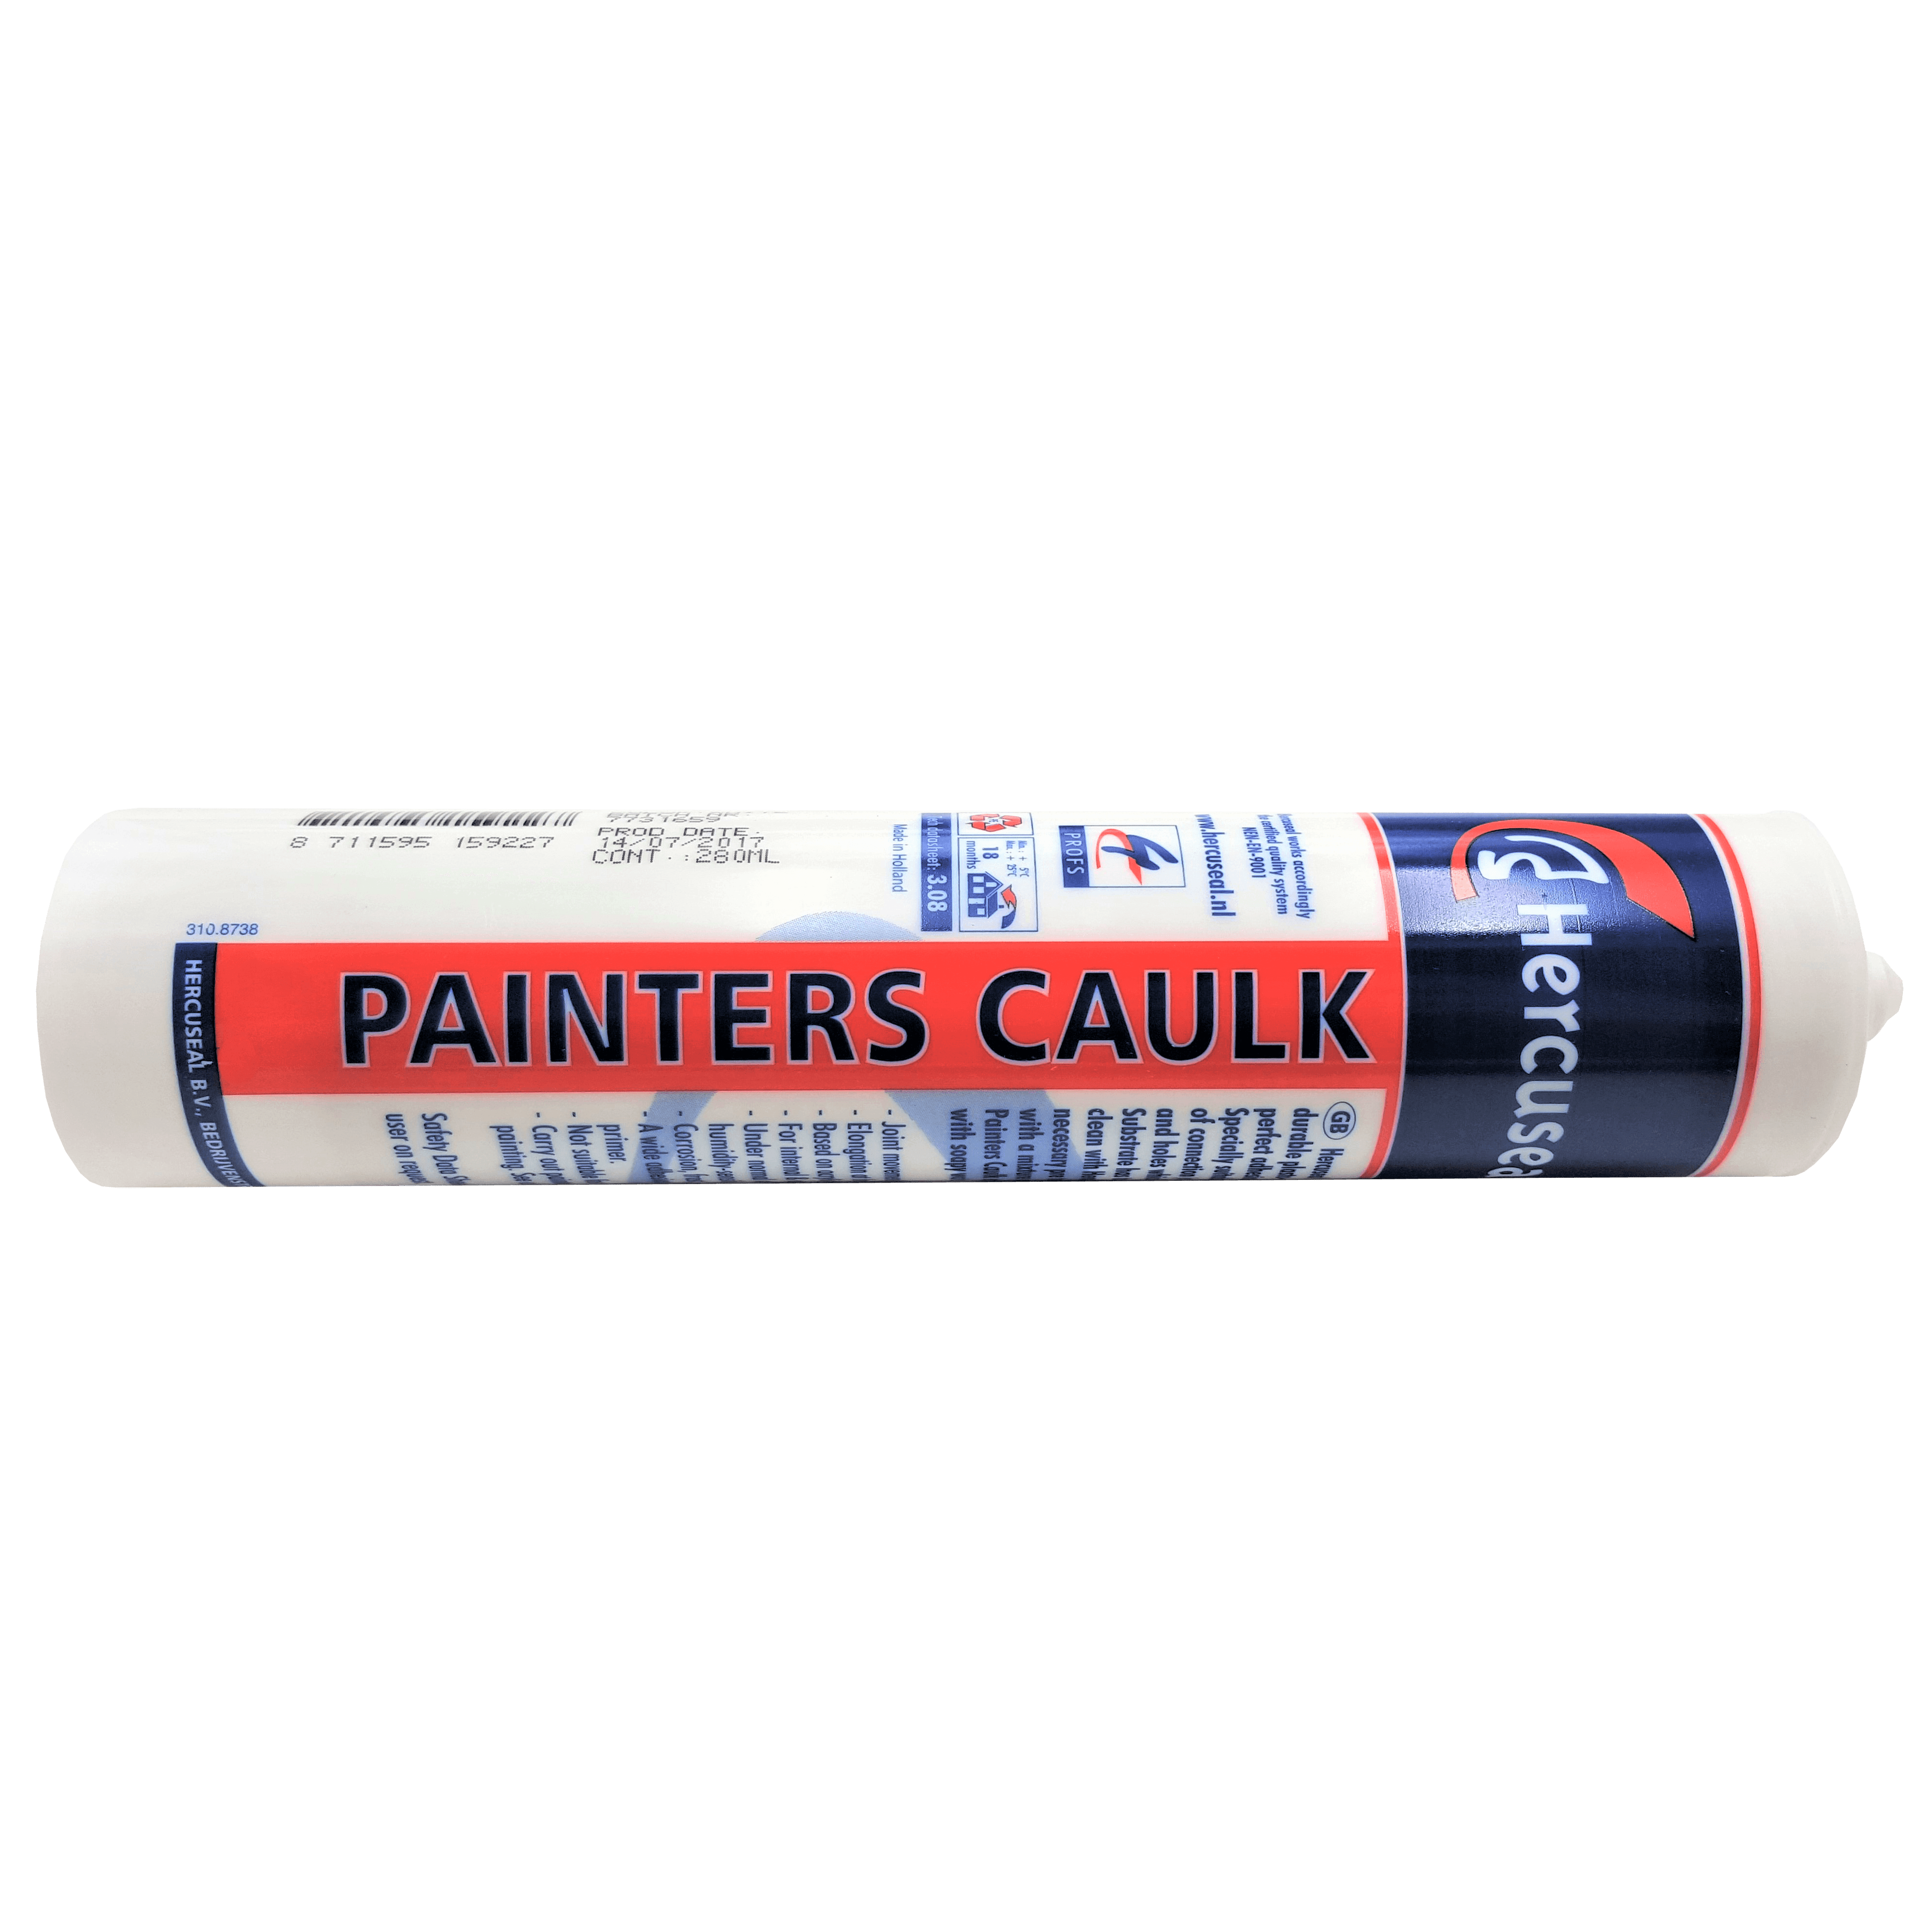 Painters Caulk